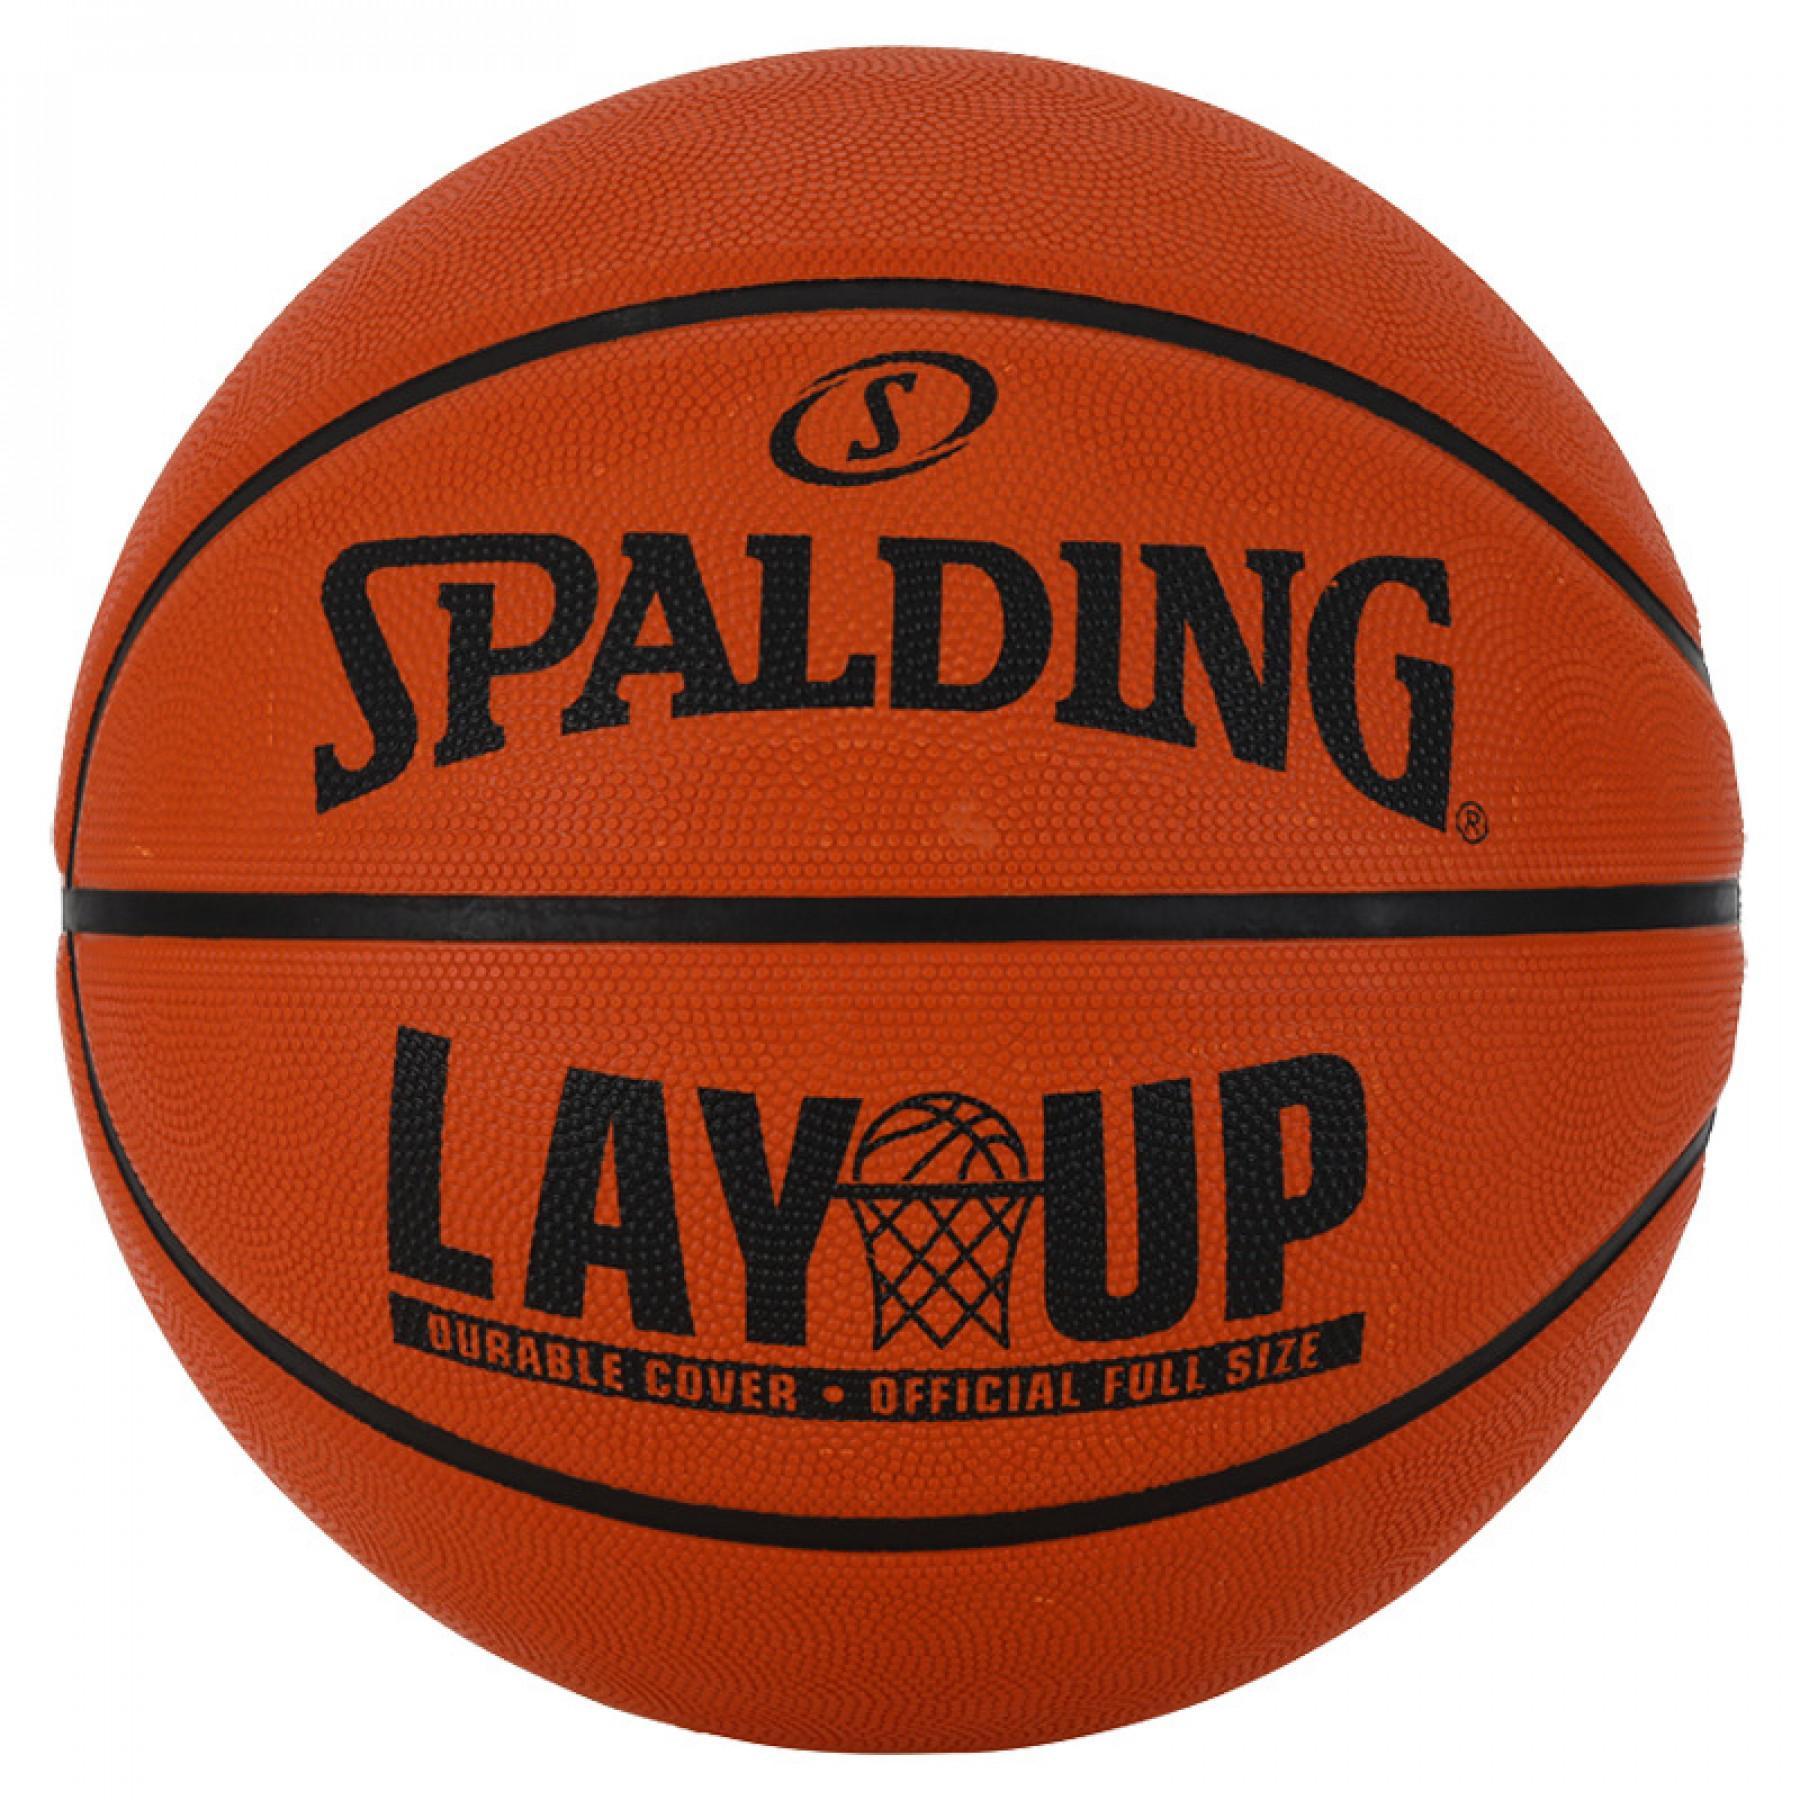 Balloon Spalding Layup (63-727z)